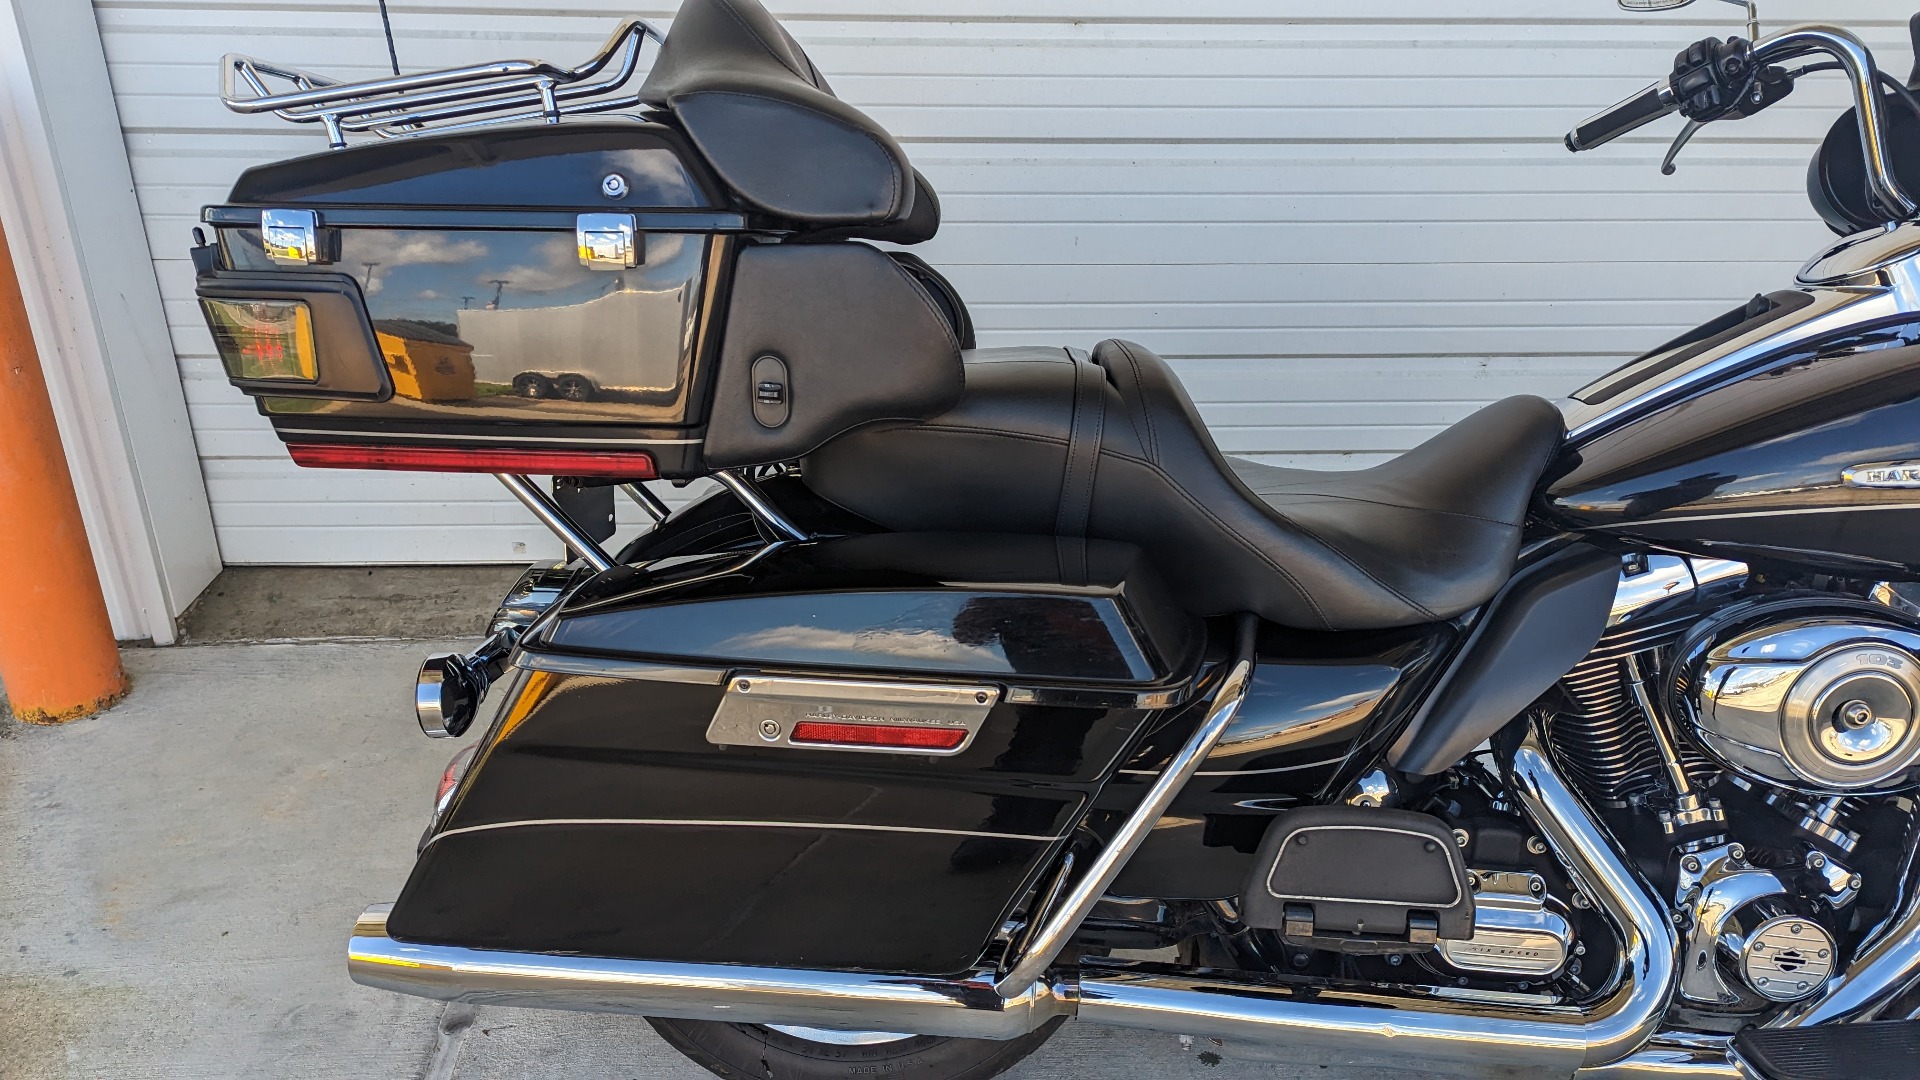 2013 Harley-Davidson Electra Glide Ultra Limited for sale in mississippi - Photo 5